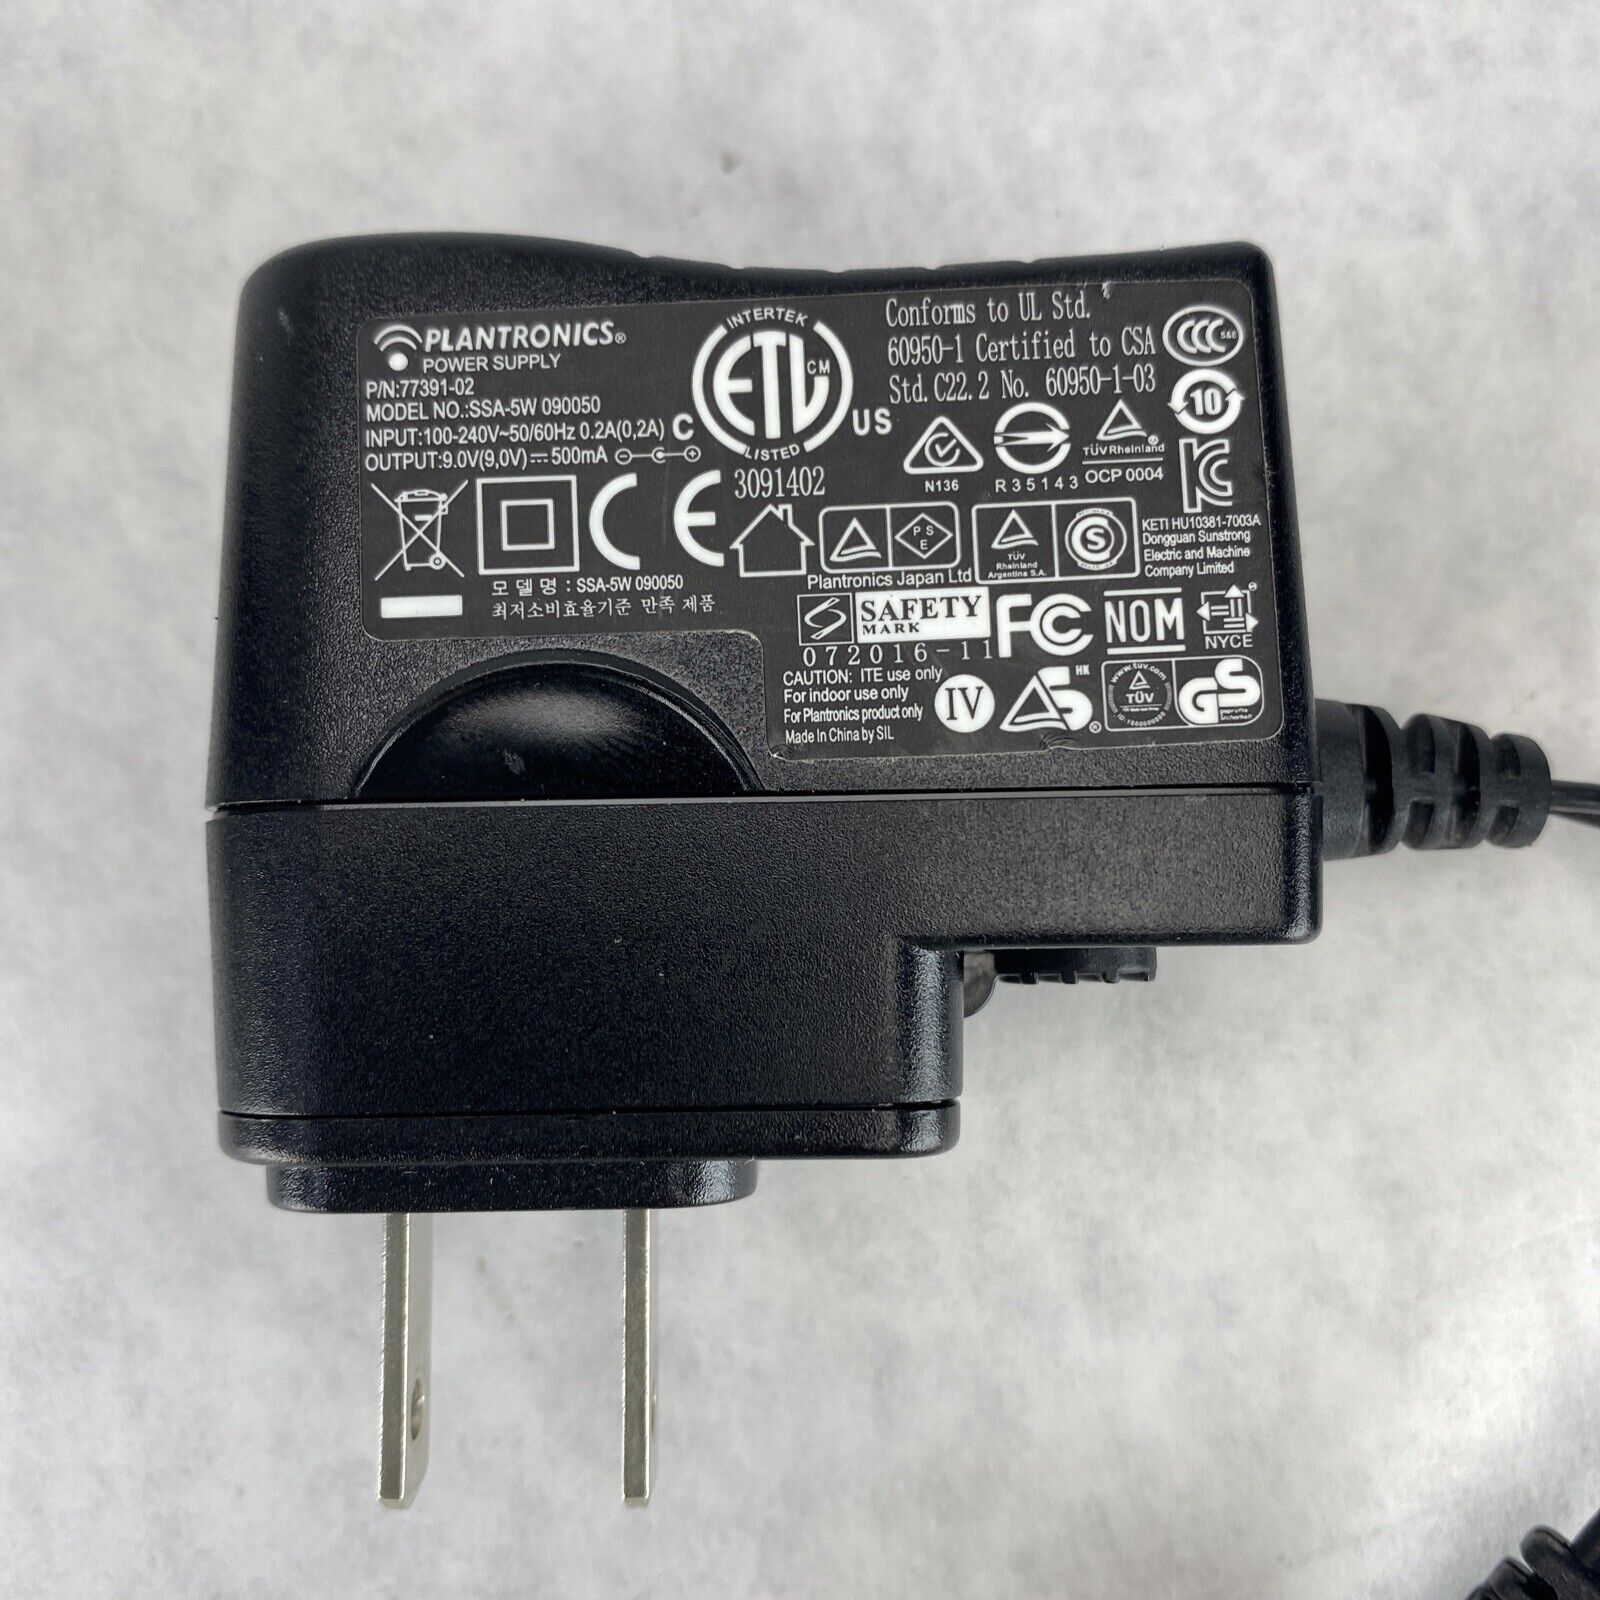 Plantronics CS50 Headset + Charging Dock + AC Adapter Cord MISSING HEADBAND